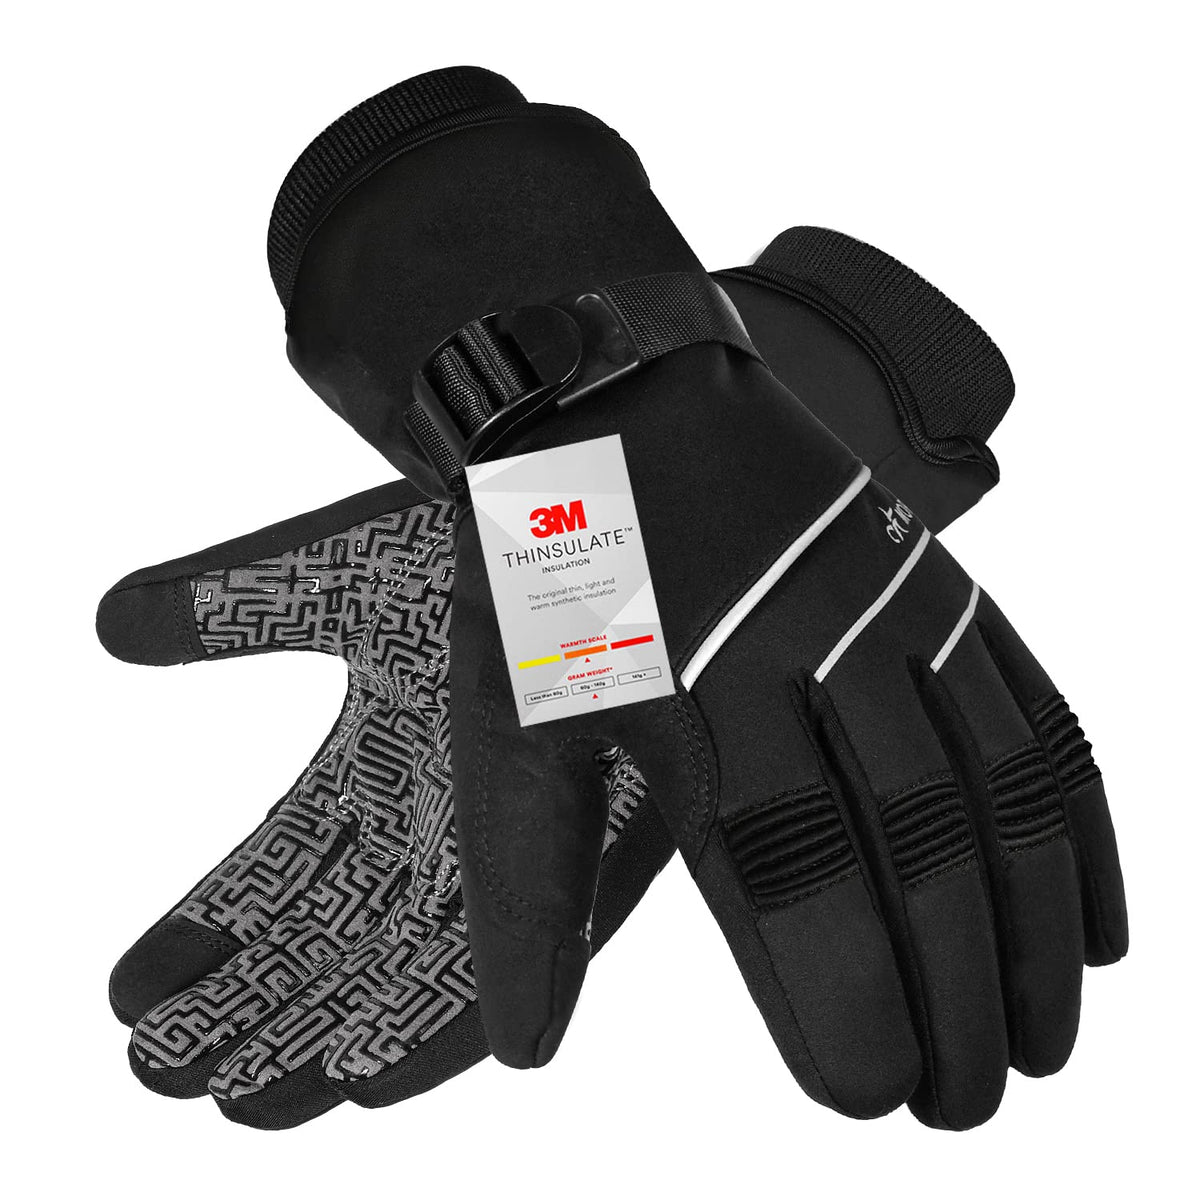 MOREOK Waterproof & Windproof -30°F Winter Gloves for Men/Women